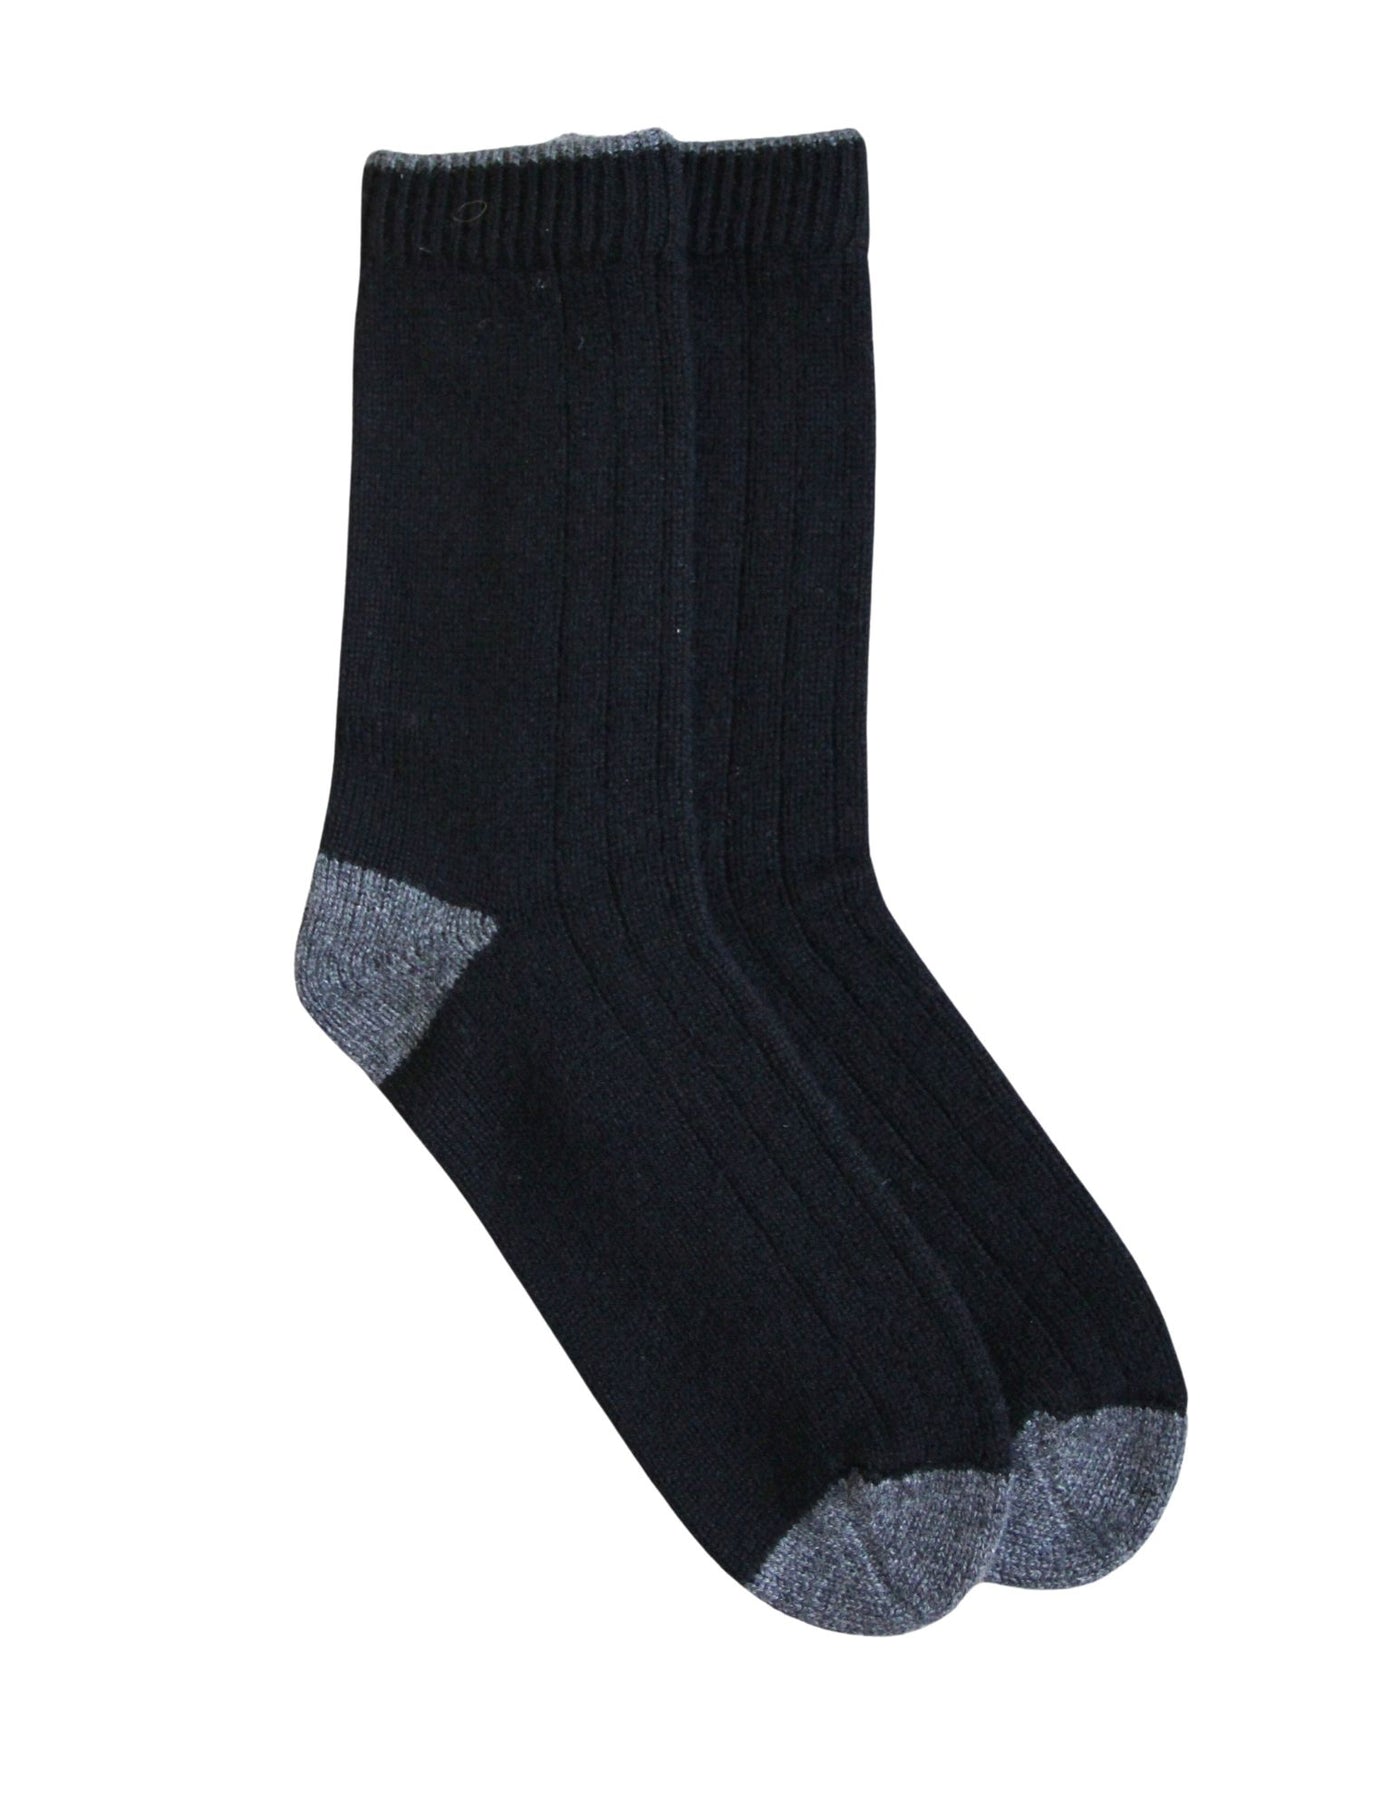 Tipped Cashmere Socks- Black